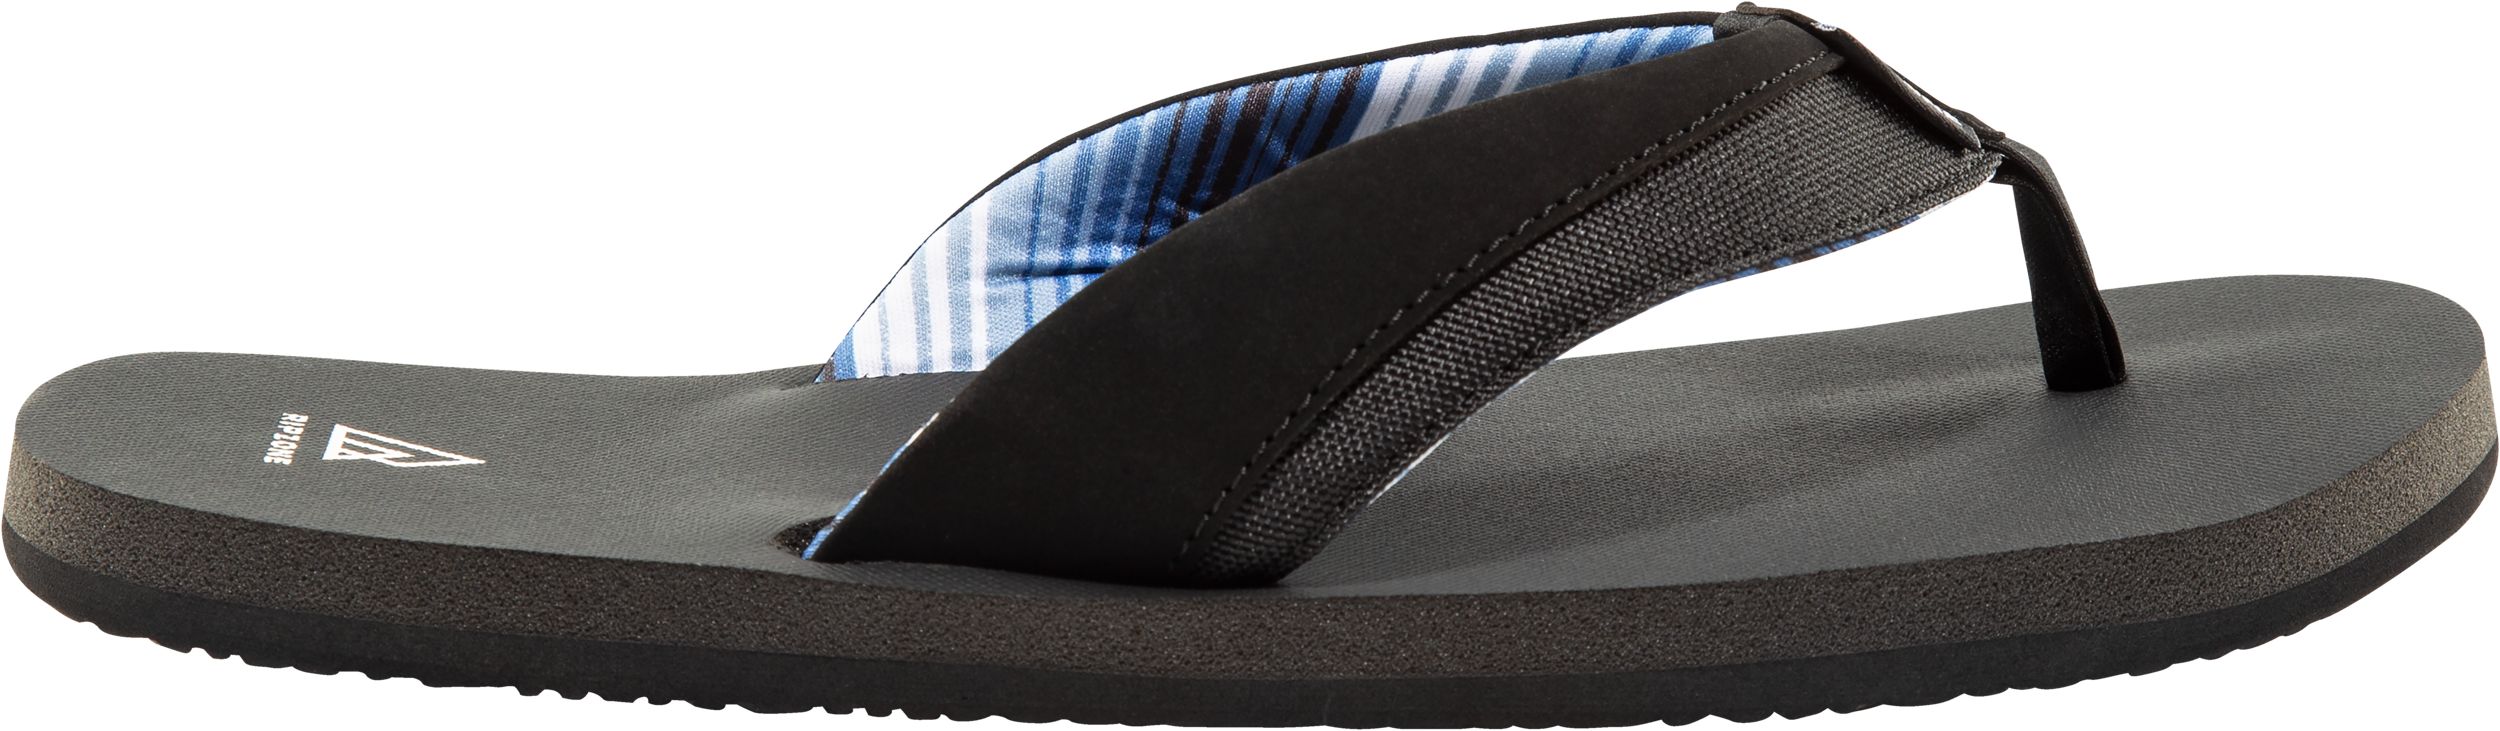 Ripzone Men's Bayside Flip Sandals